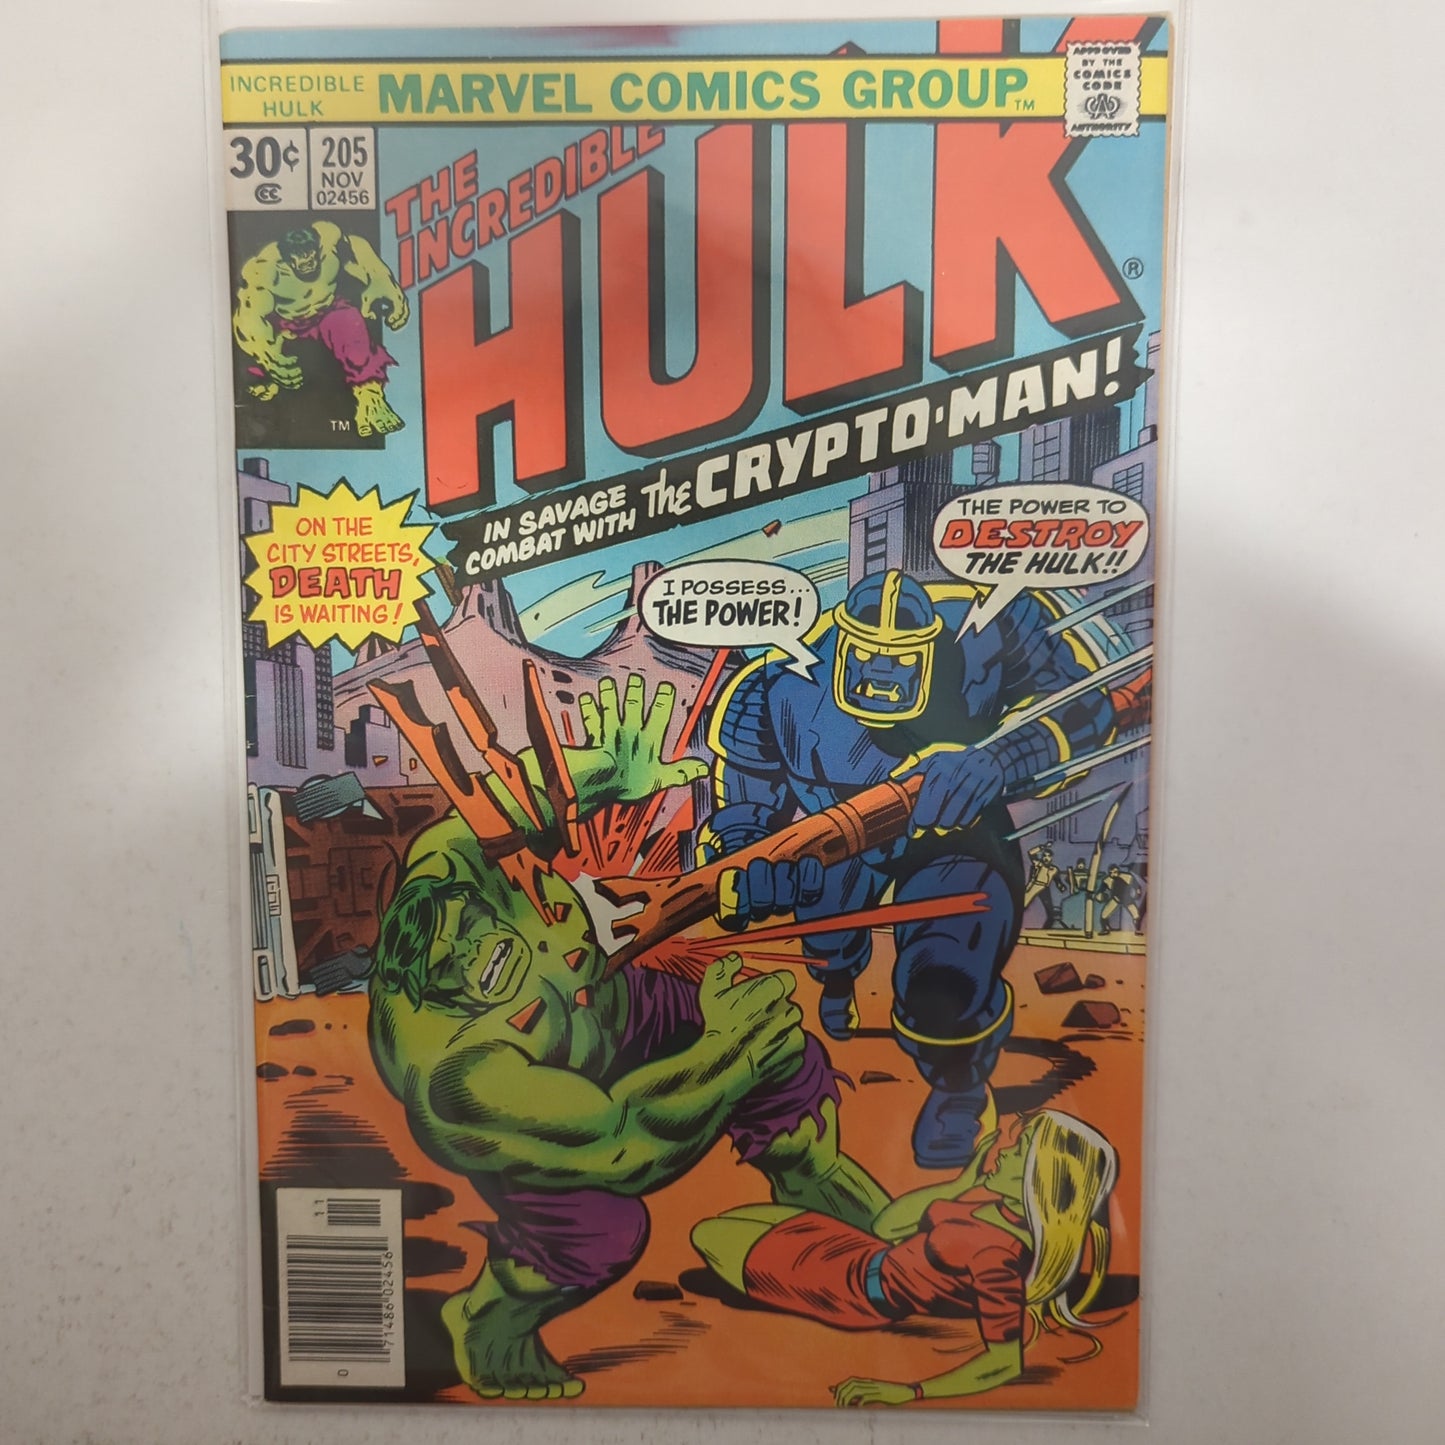 The Incredible Hulk #205 Newsstand